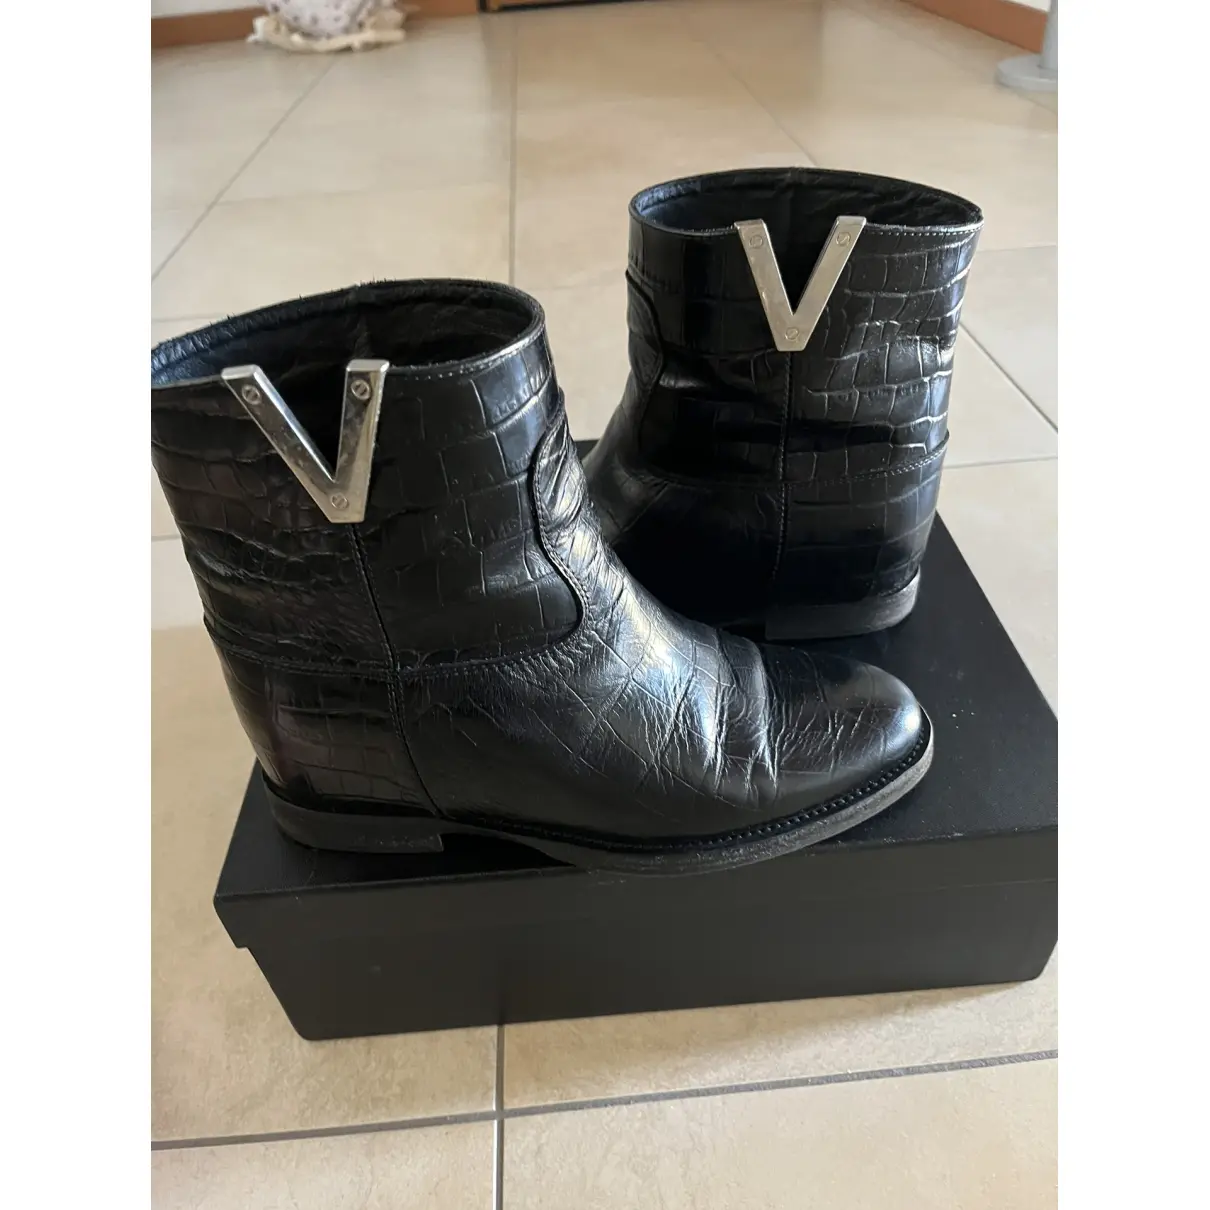 Luxury Via Roma xv Ankle boots Women